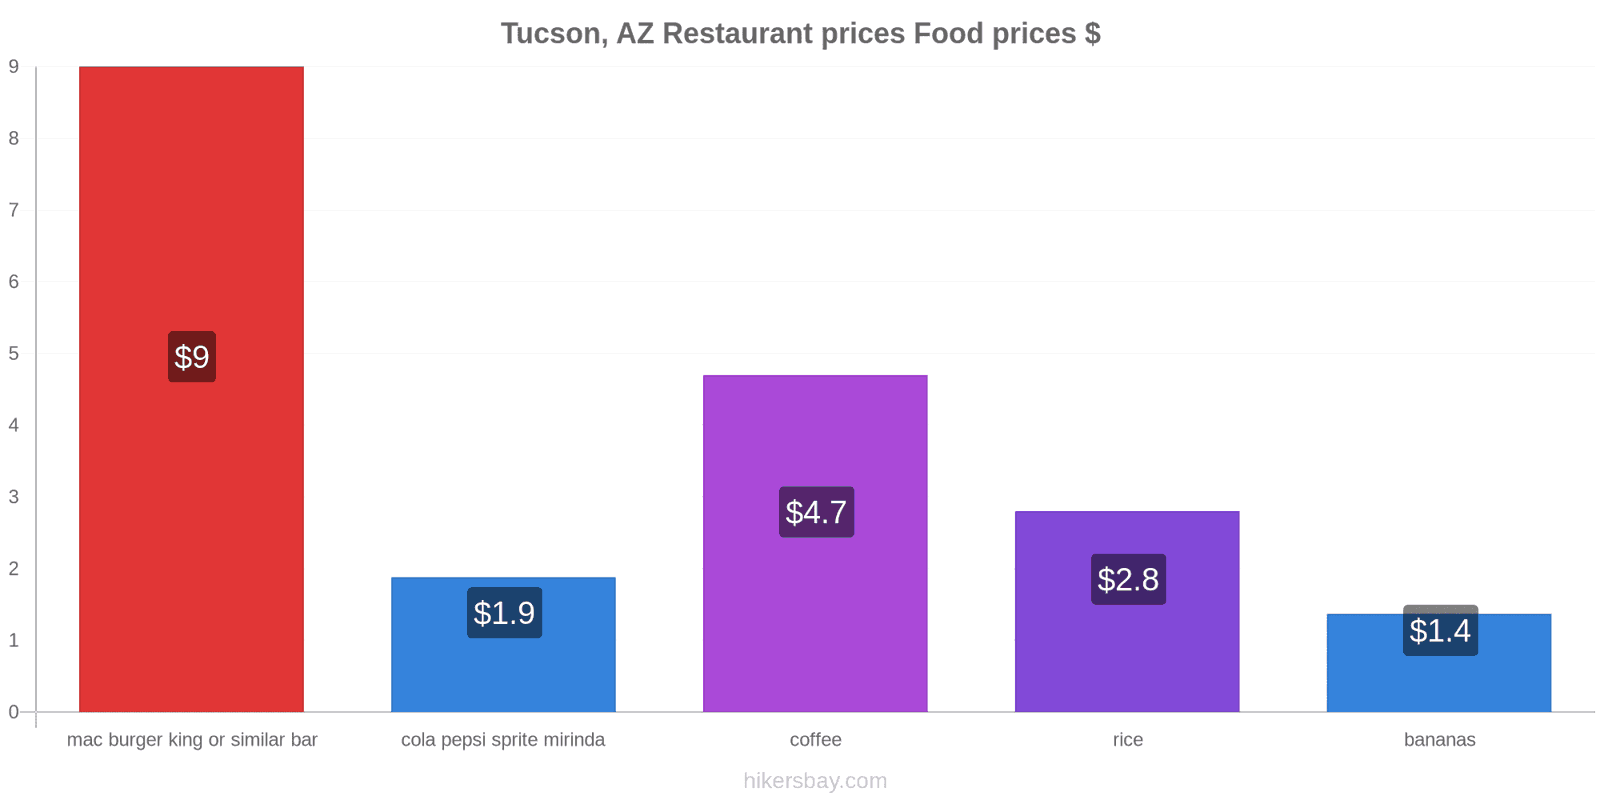 Tucson, AZ price changes hikersbay.com